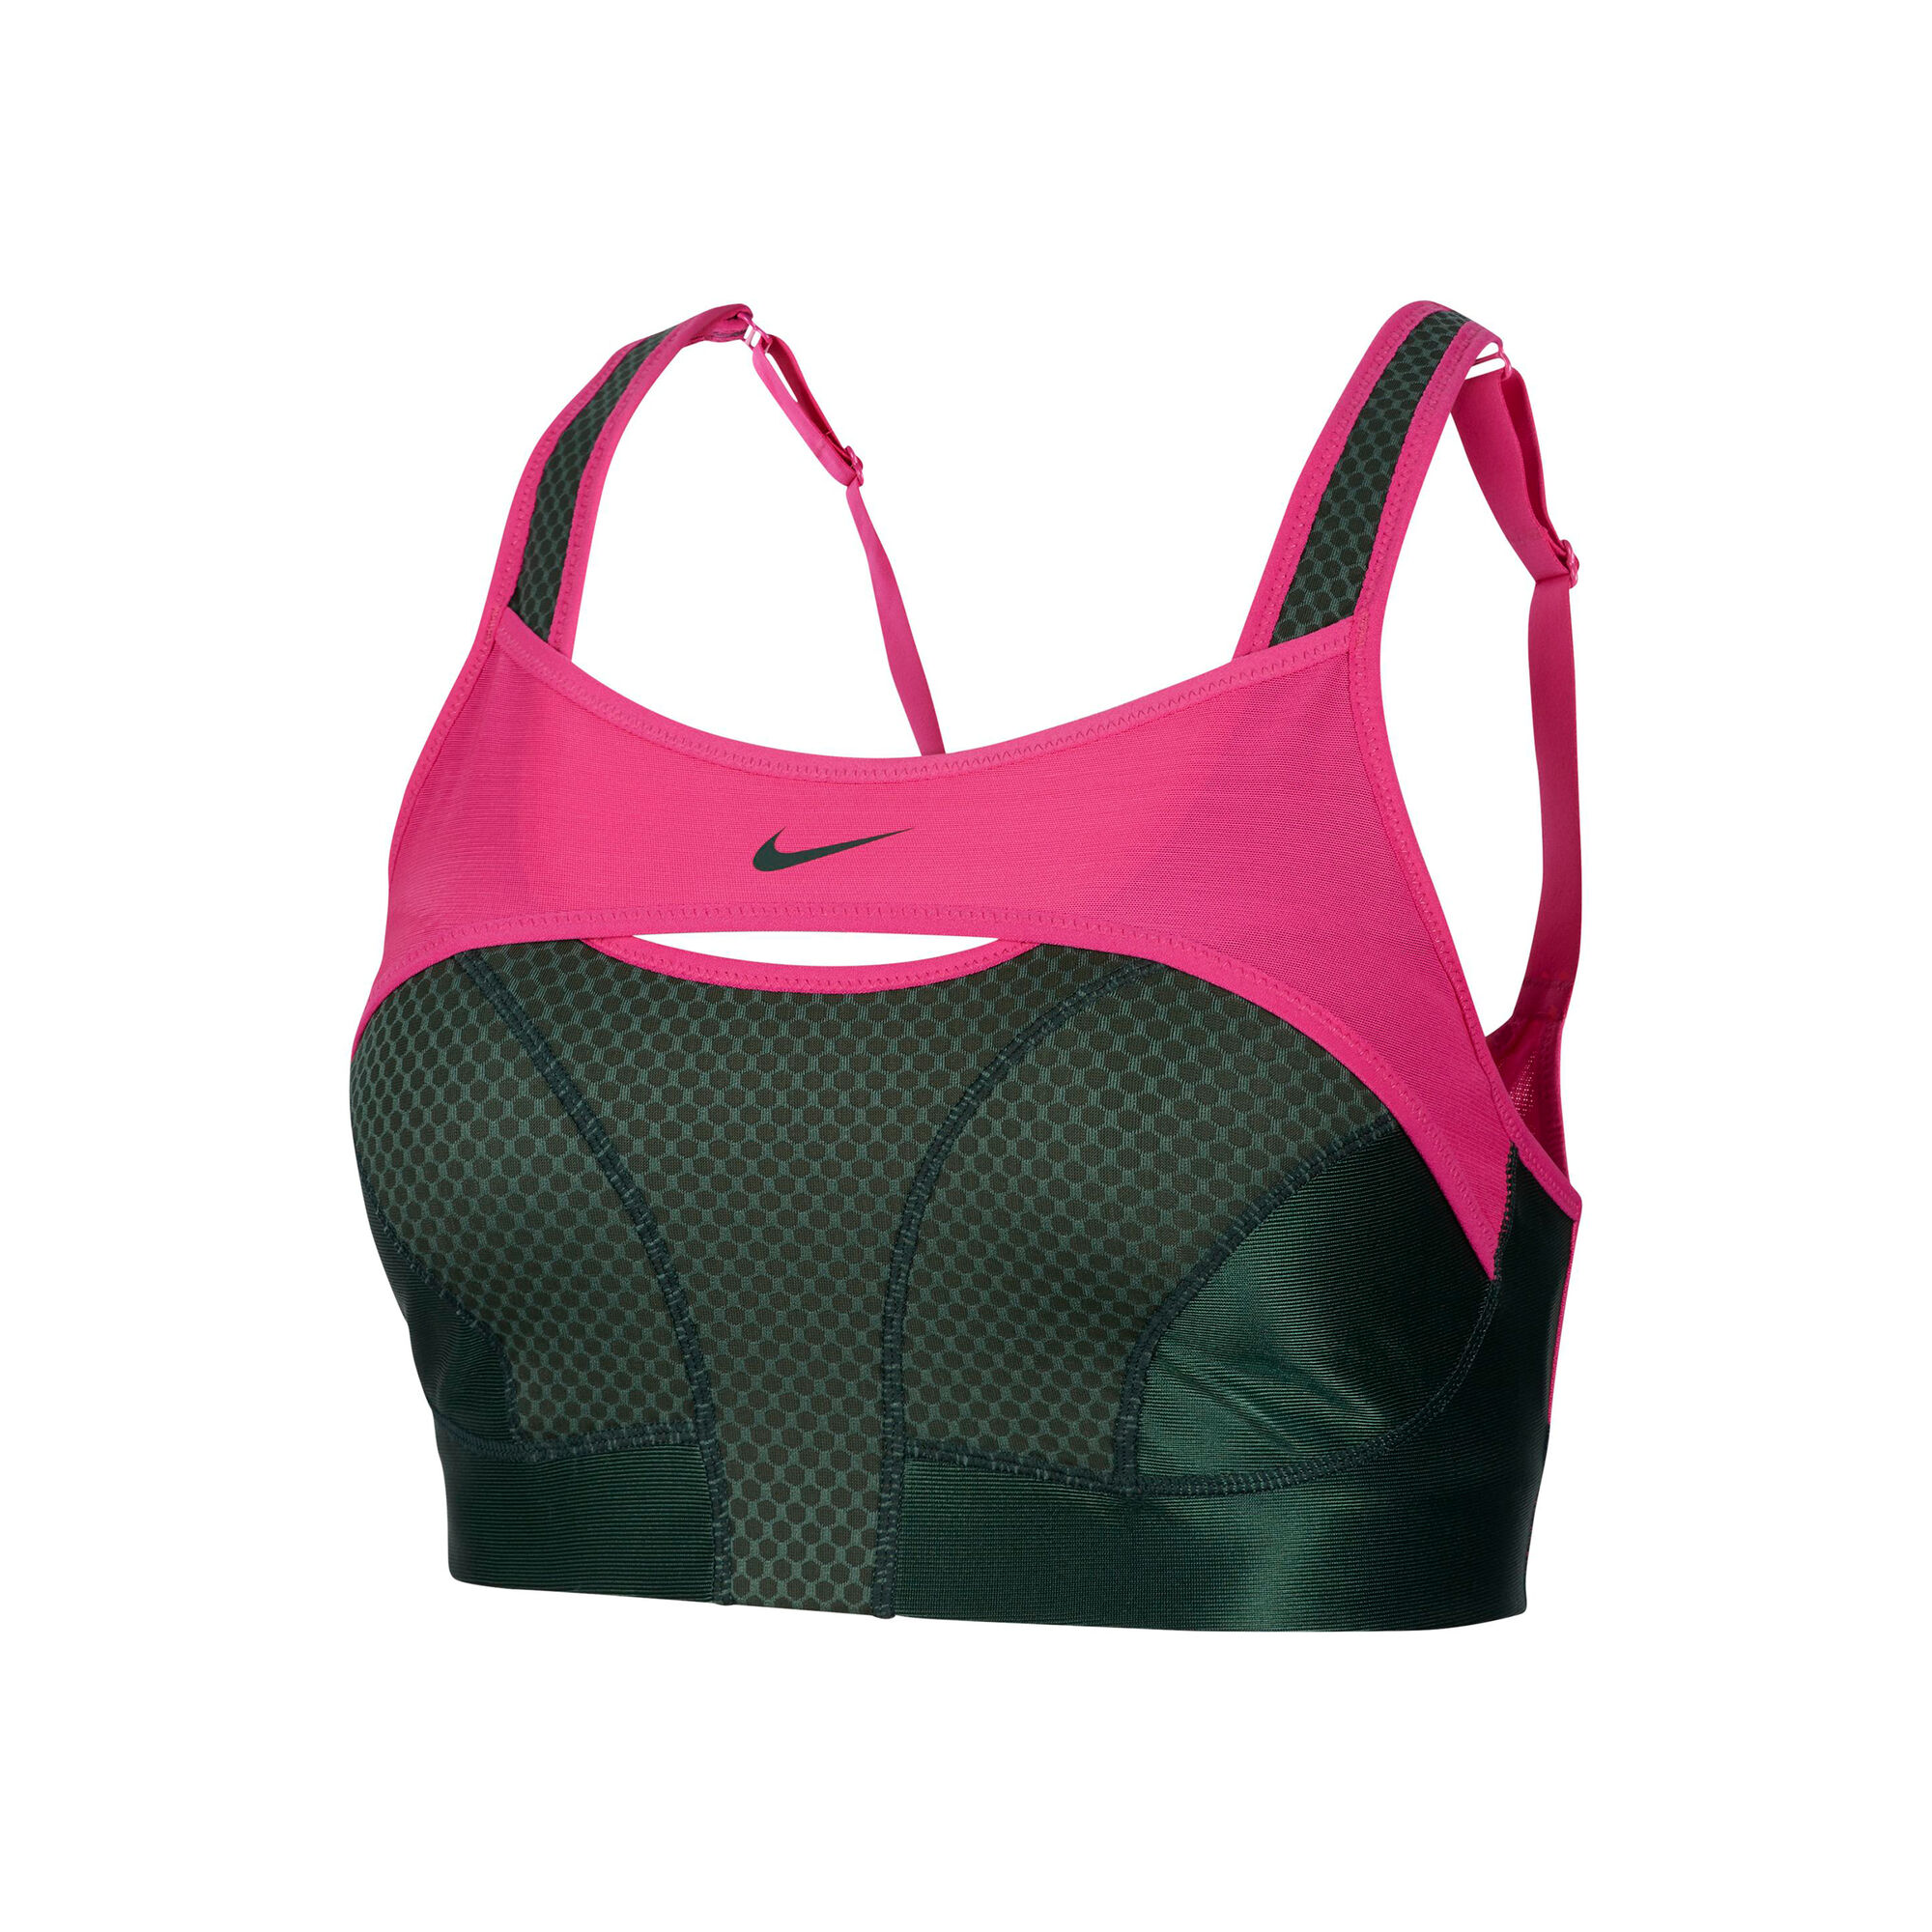 Alpha Ultrabreathe Sports Bras Women - Dark Green, Pink